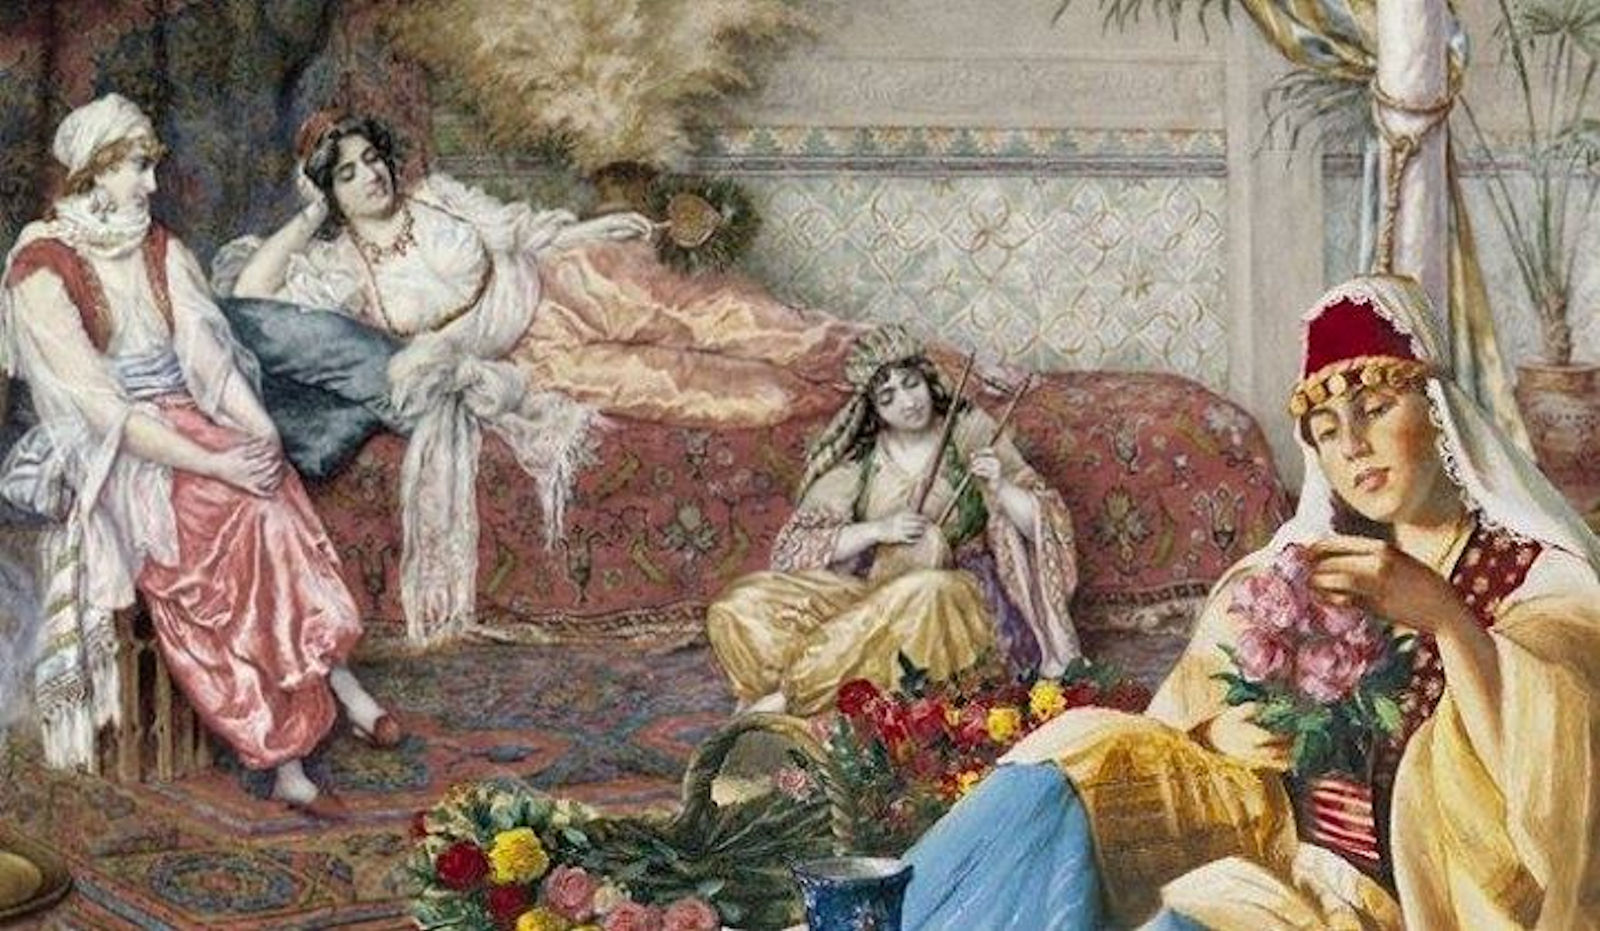 Painting of a Turkish harem